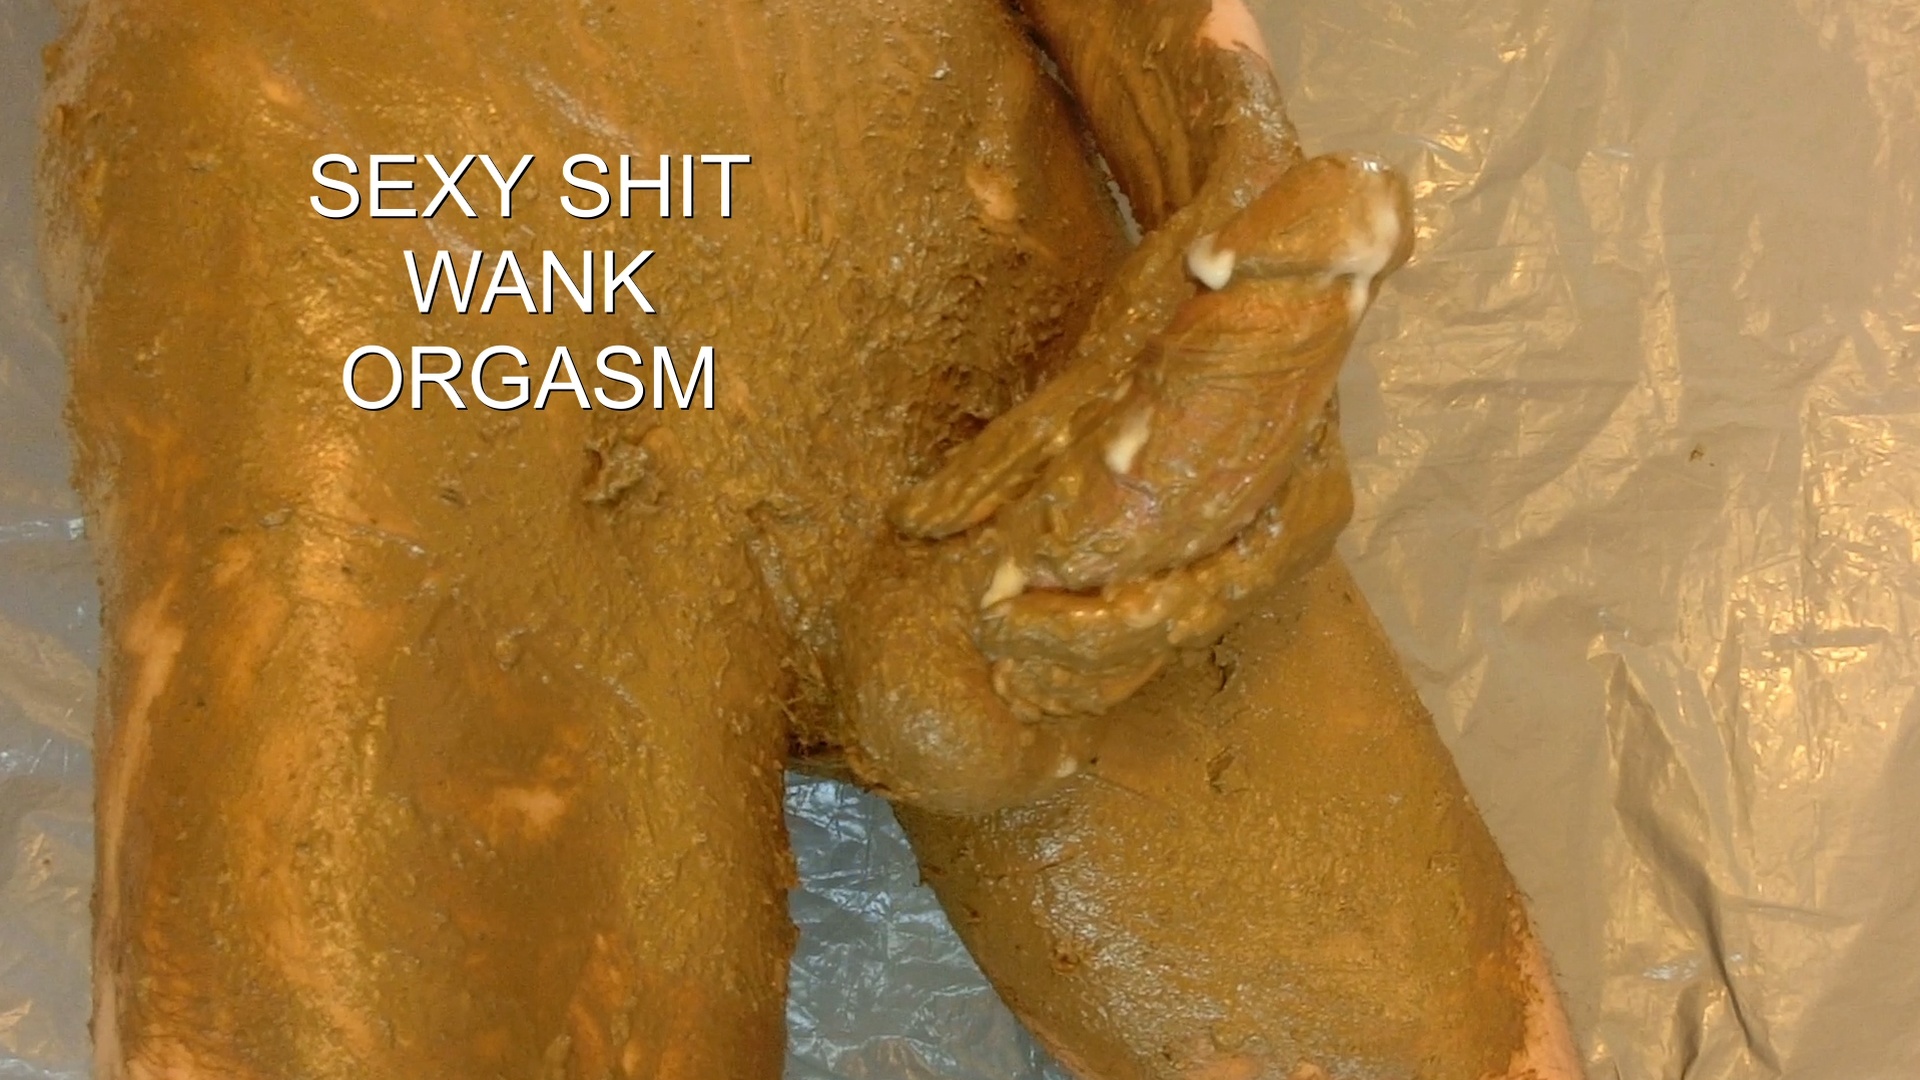 Sexy Shit Wank Orgasm Full Body Scat Smearing